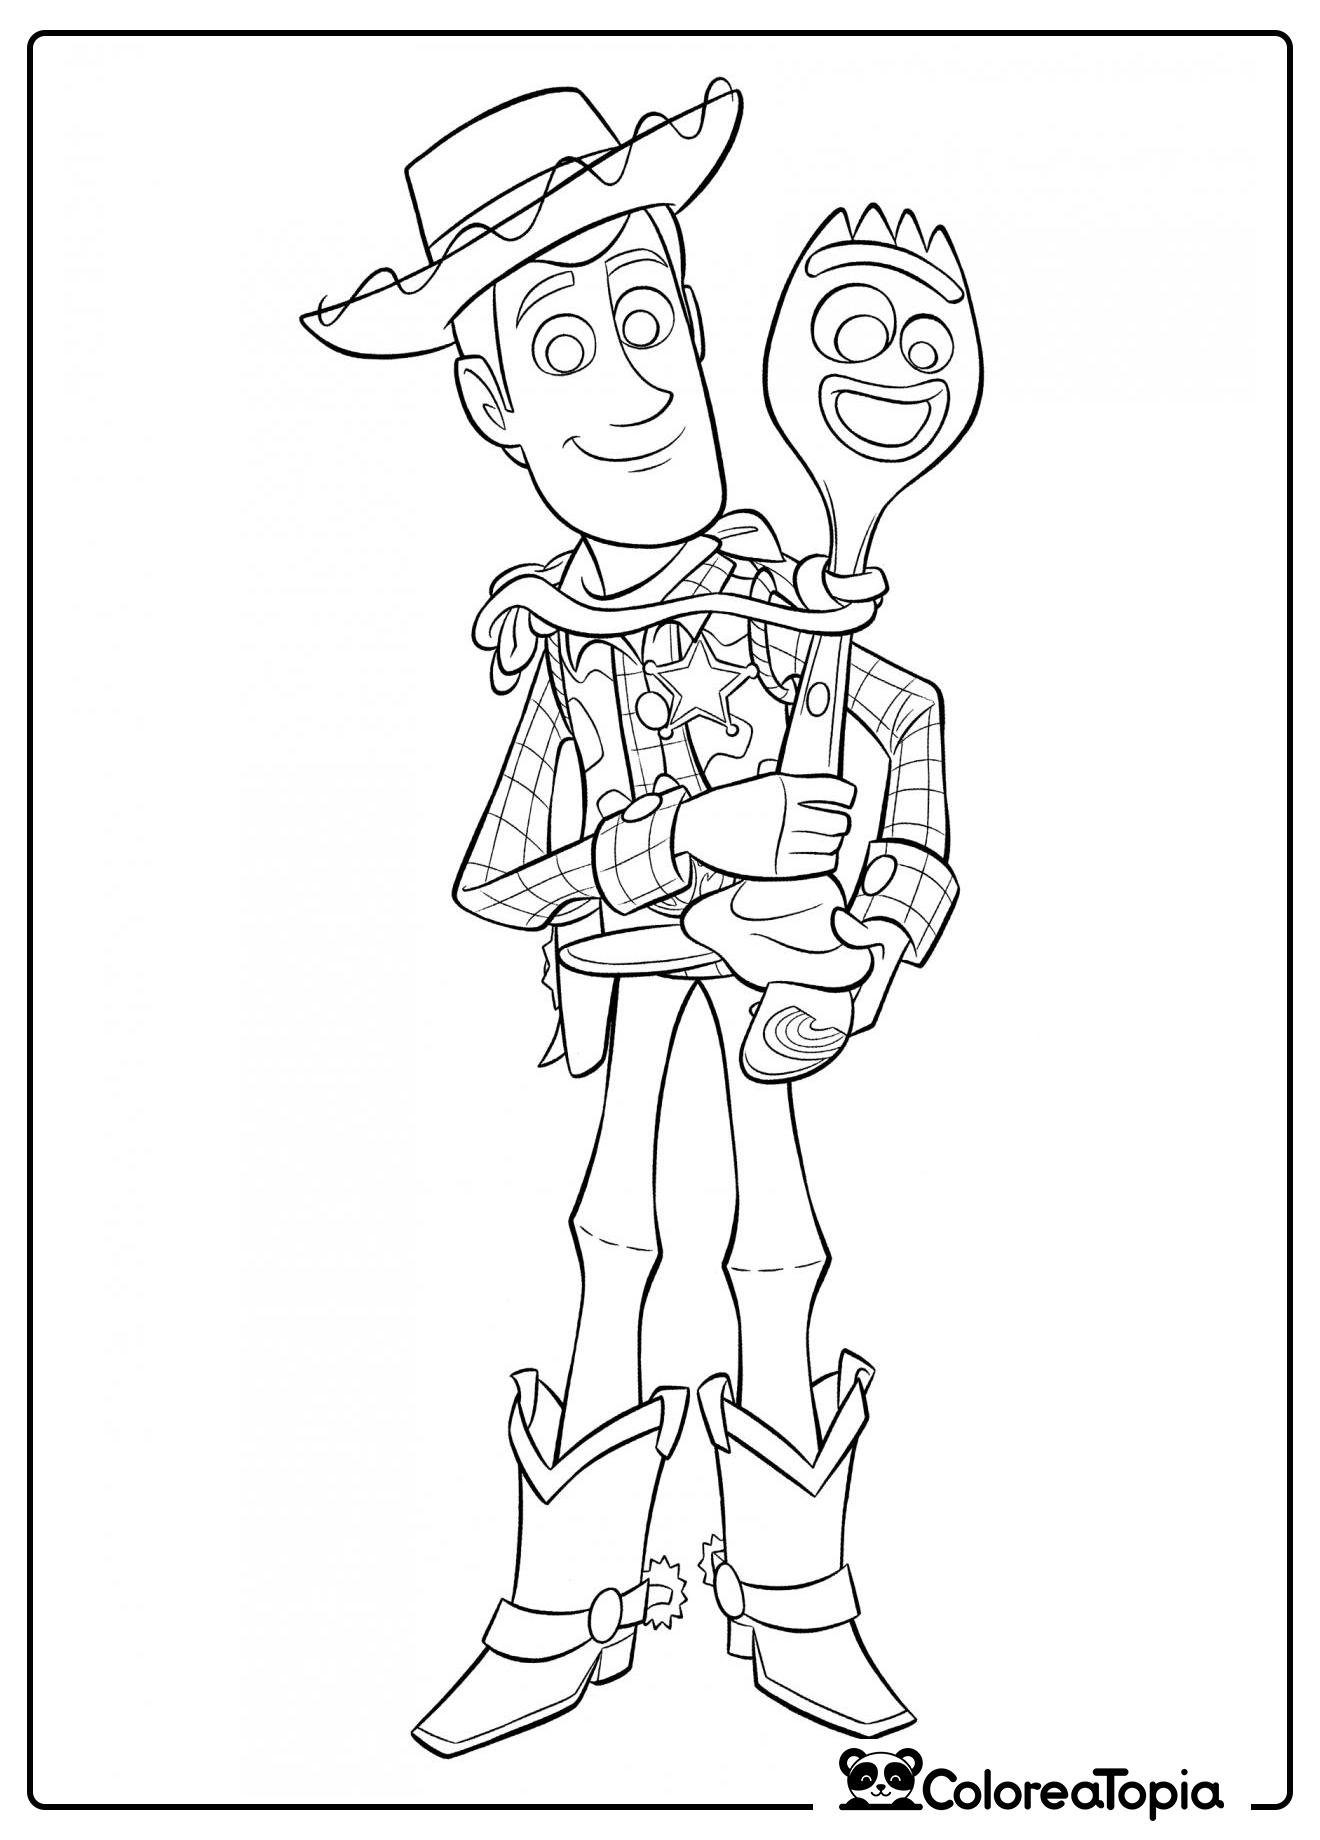 Woody abraza a Forky - dibujo para colorear